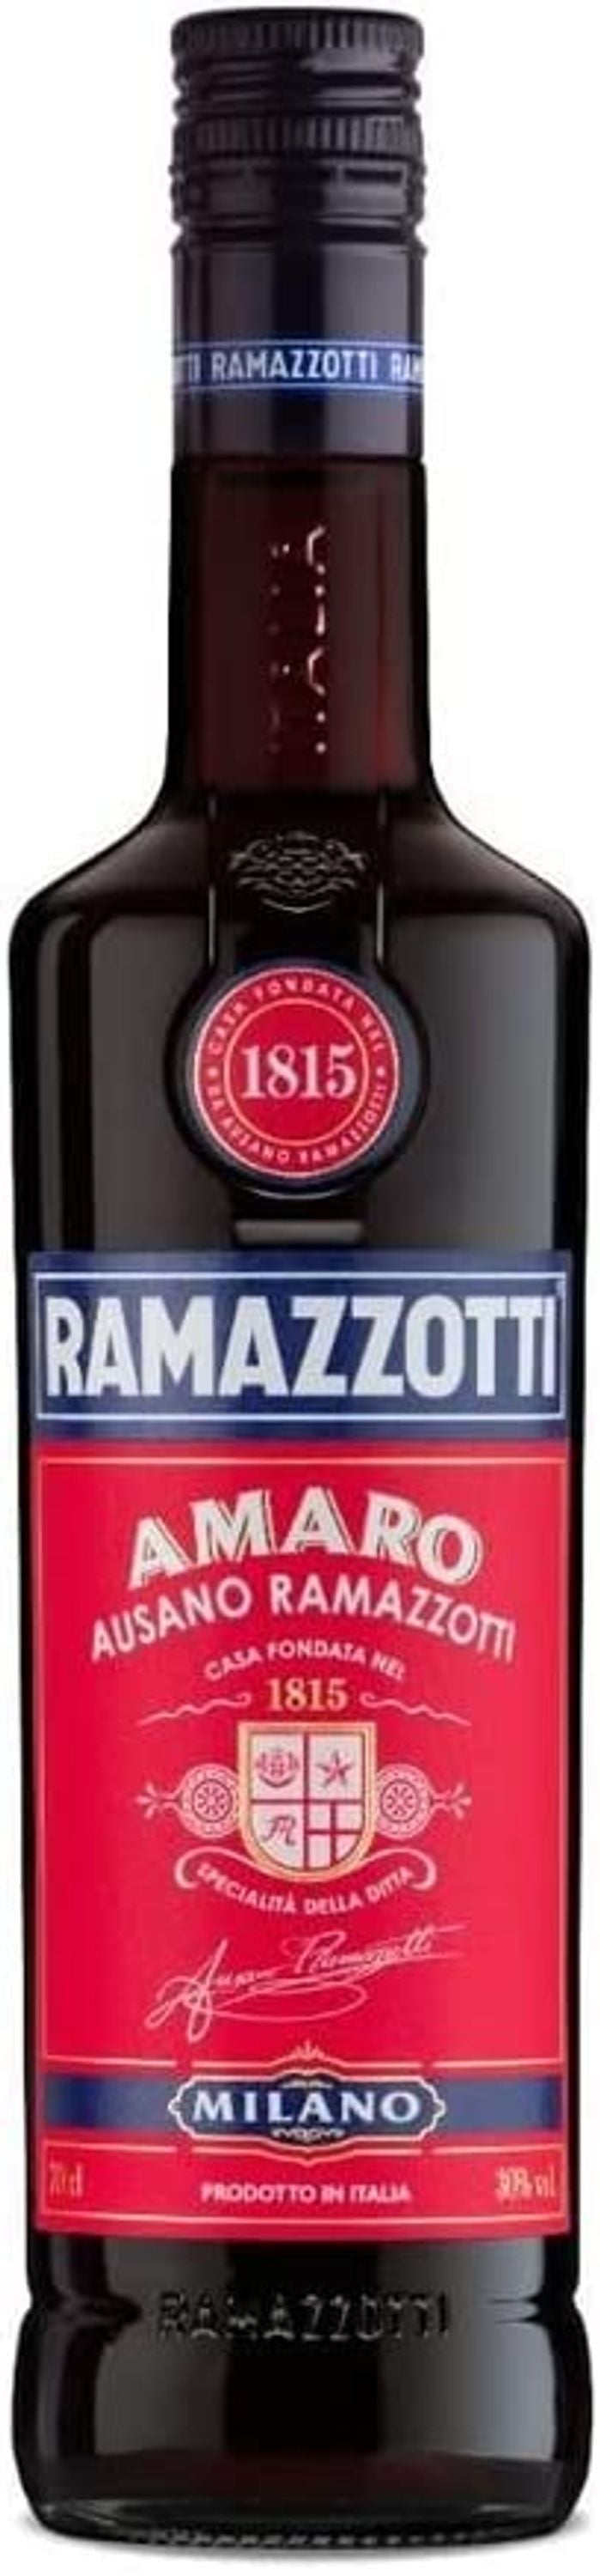 Ramazzotti Amaro 0.7l, alc. 30% by volume, herbal liqueur Italy 